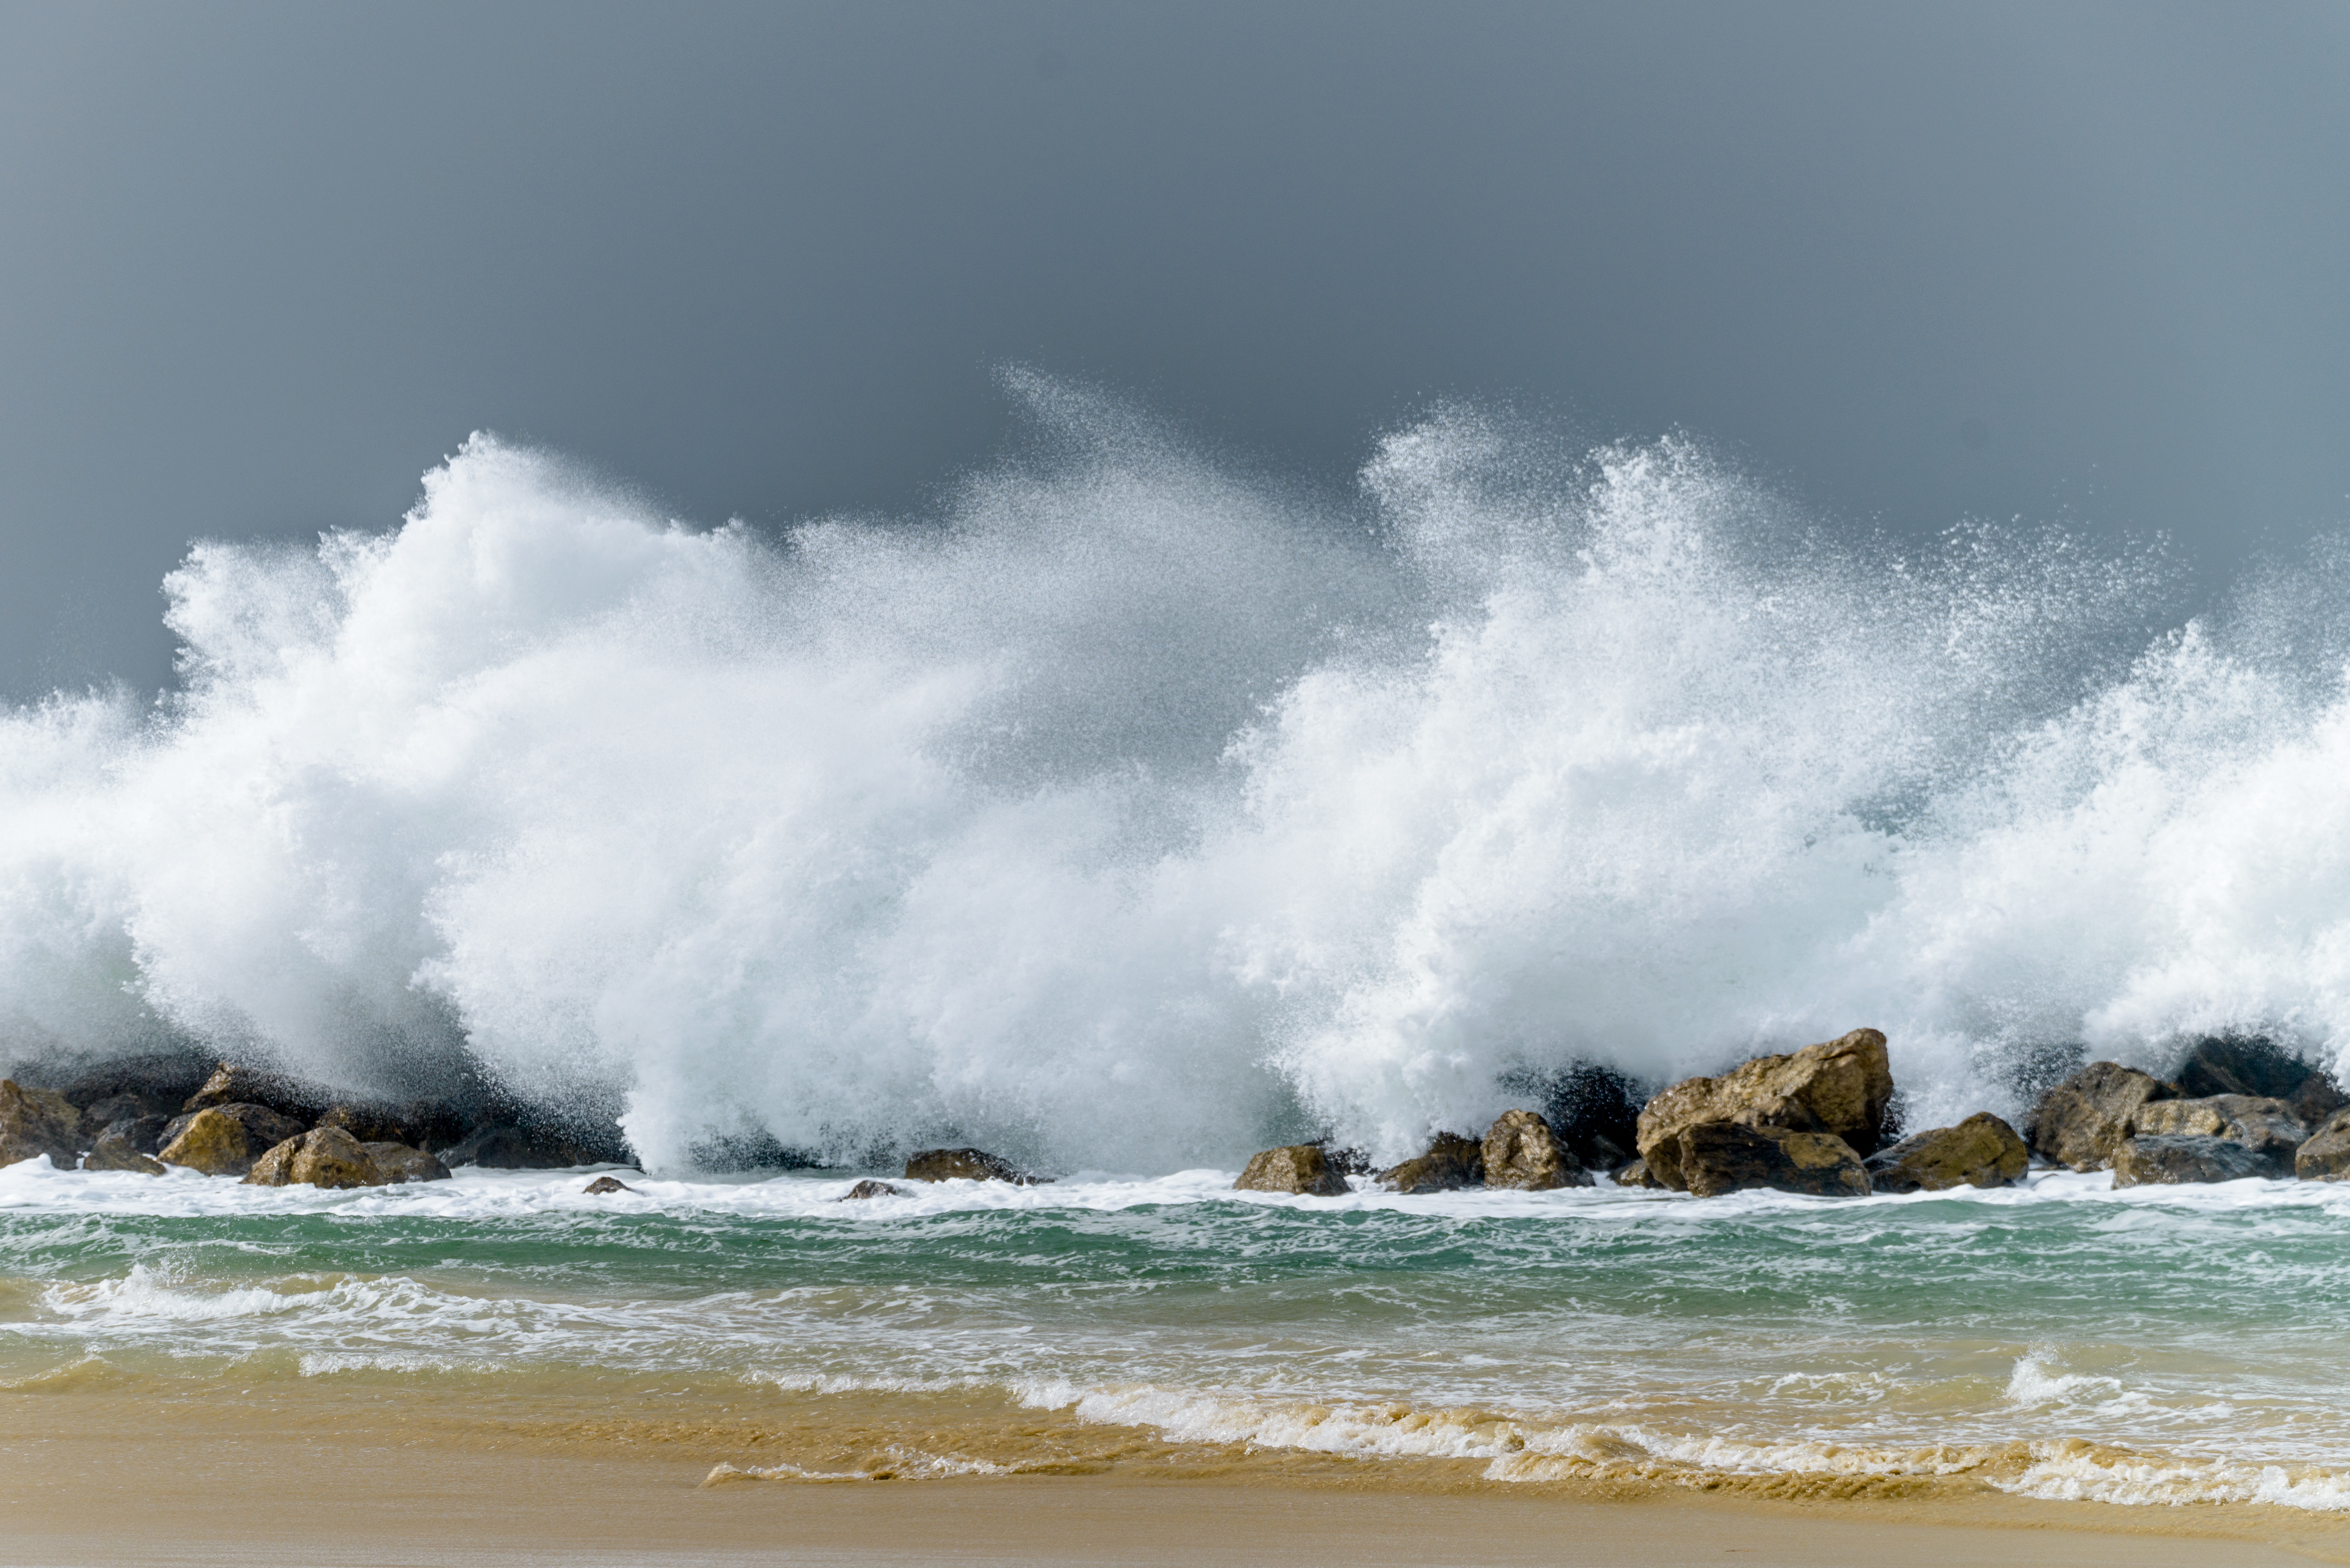 High waves at a coastal location